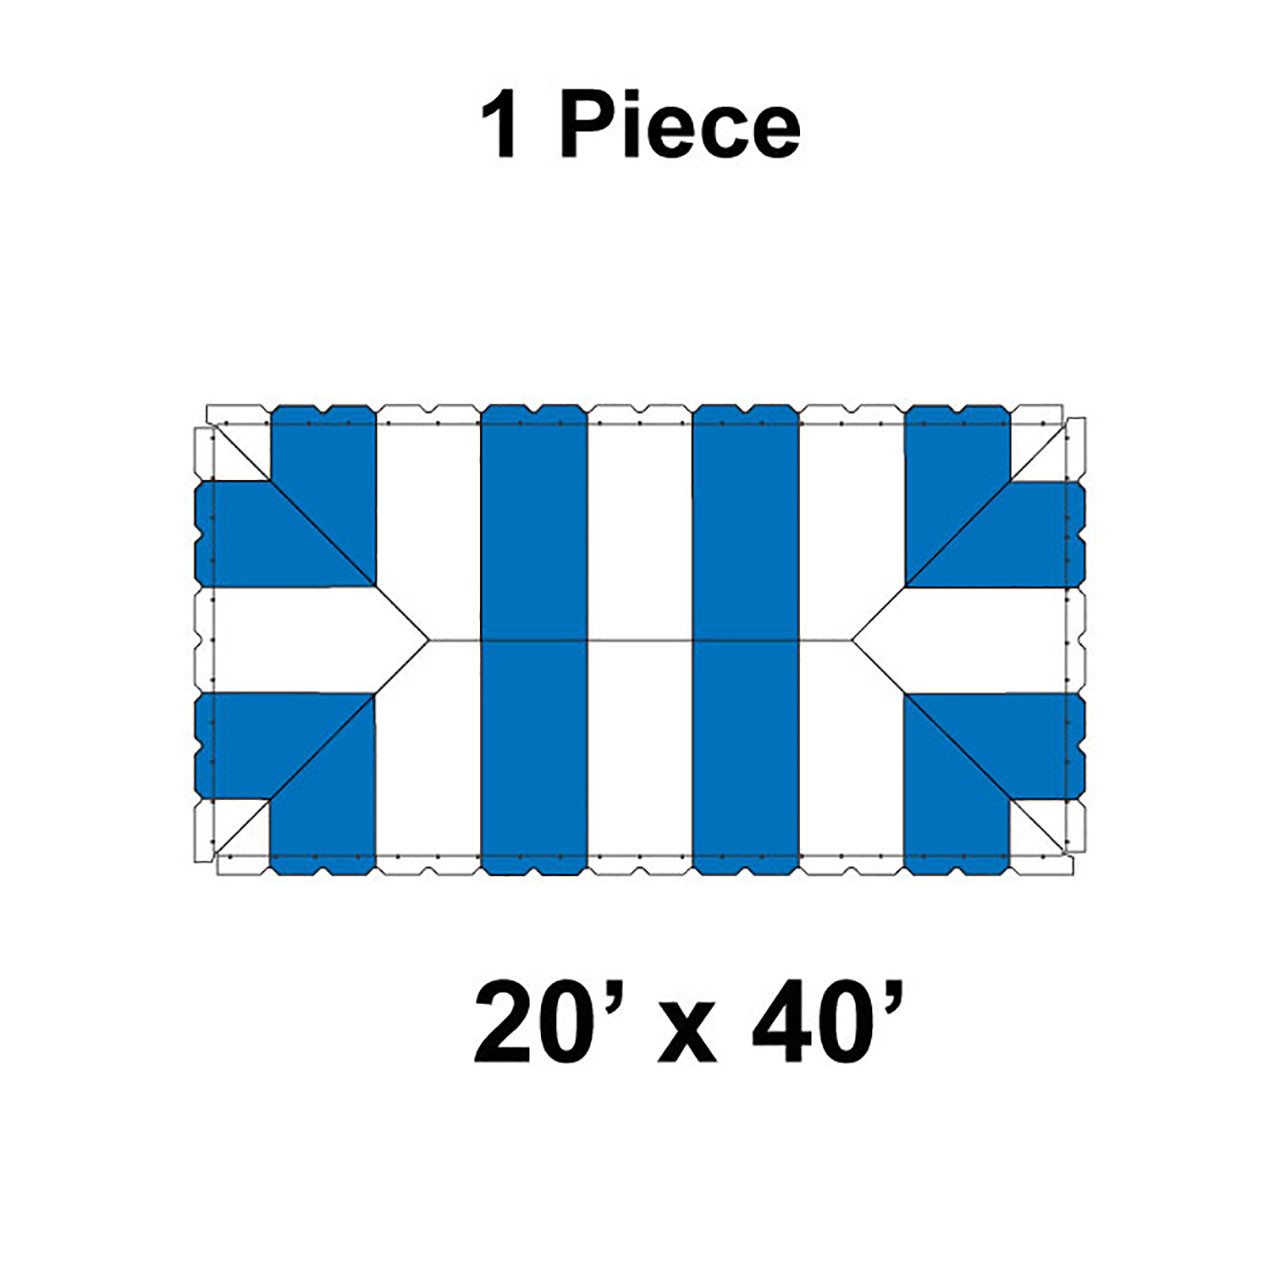 20' x 40' Classic Pole Tent, 1 Piece, 16 oz. Ratchet Top, White and Blue